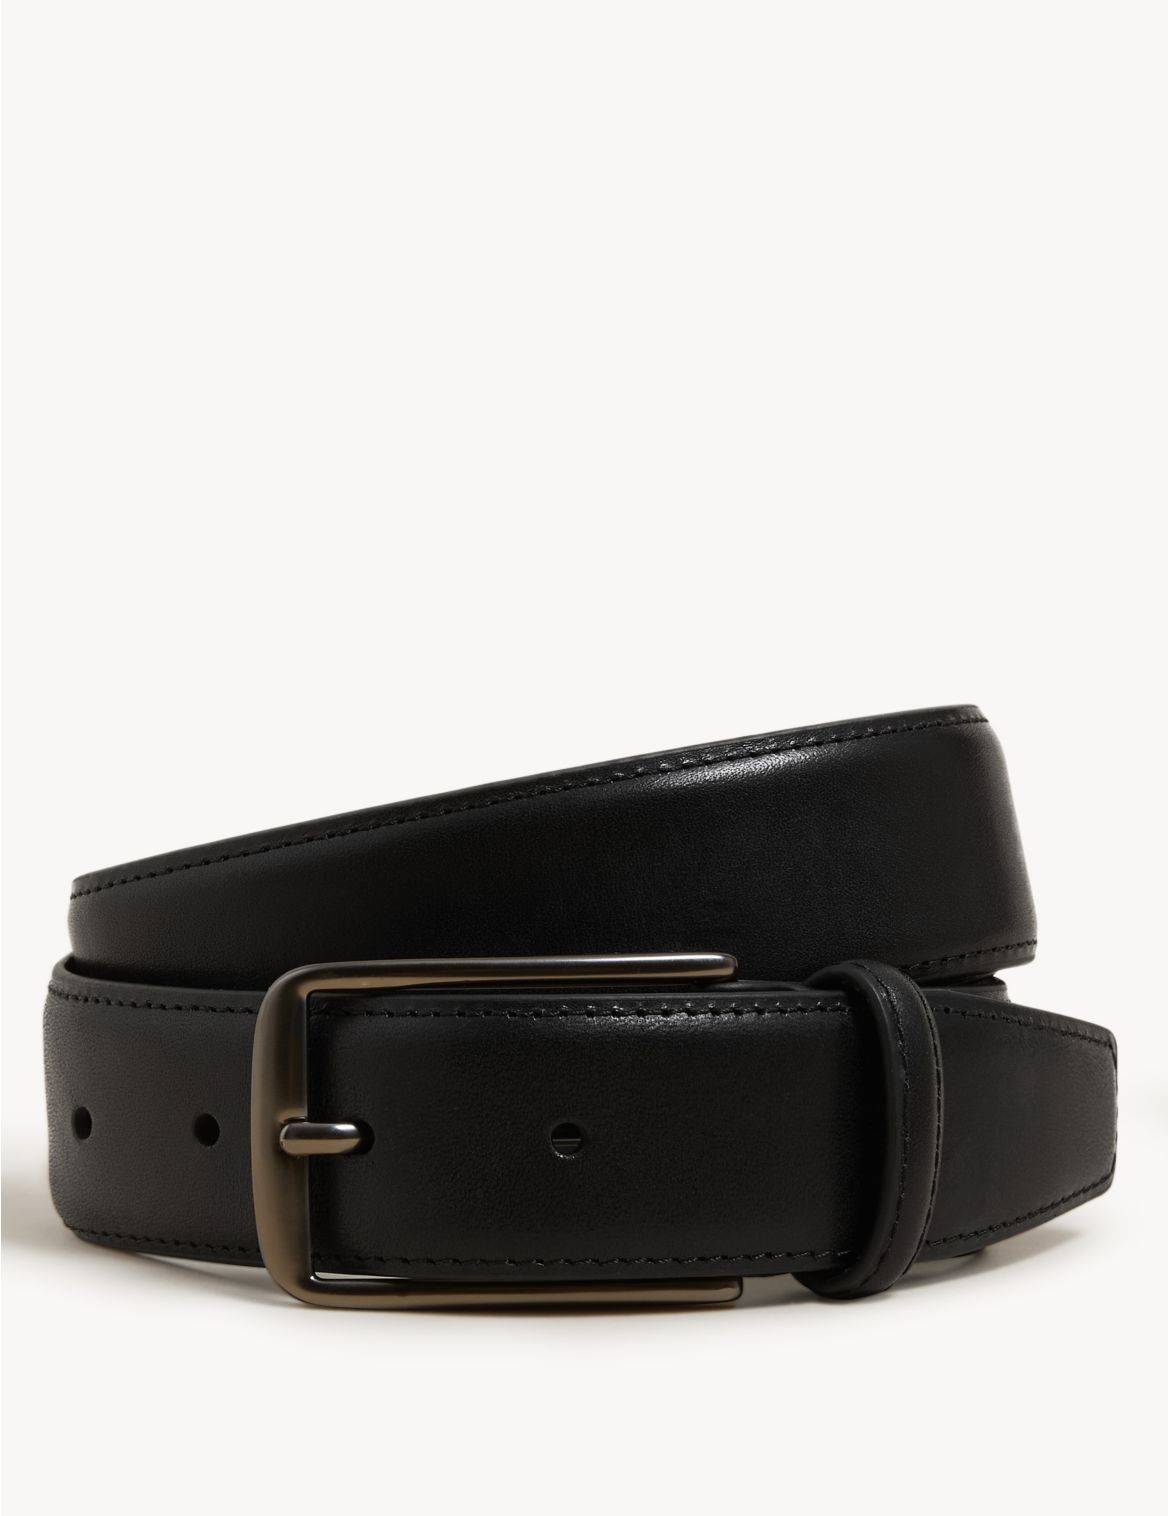 Italian Leather Smart Belt black